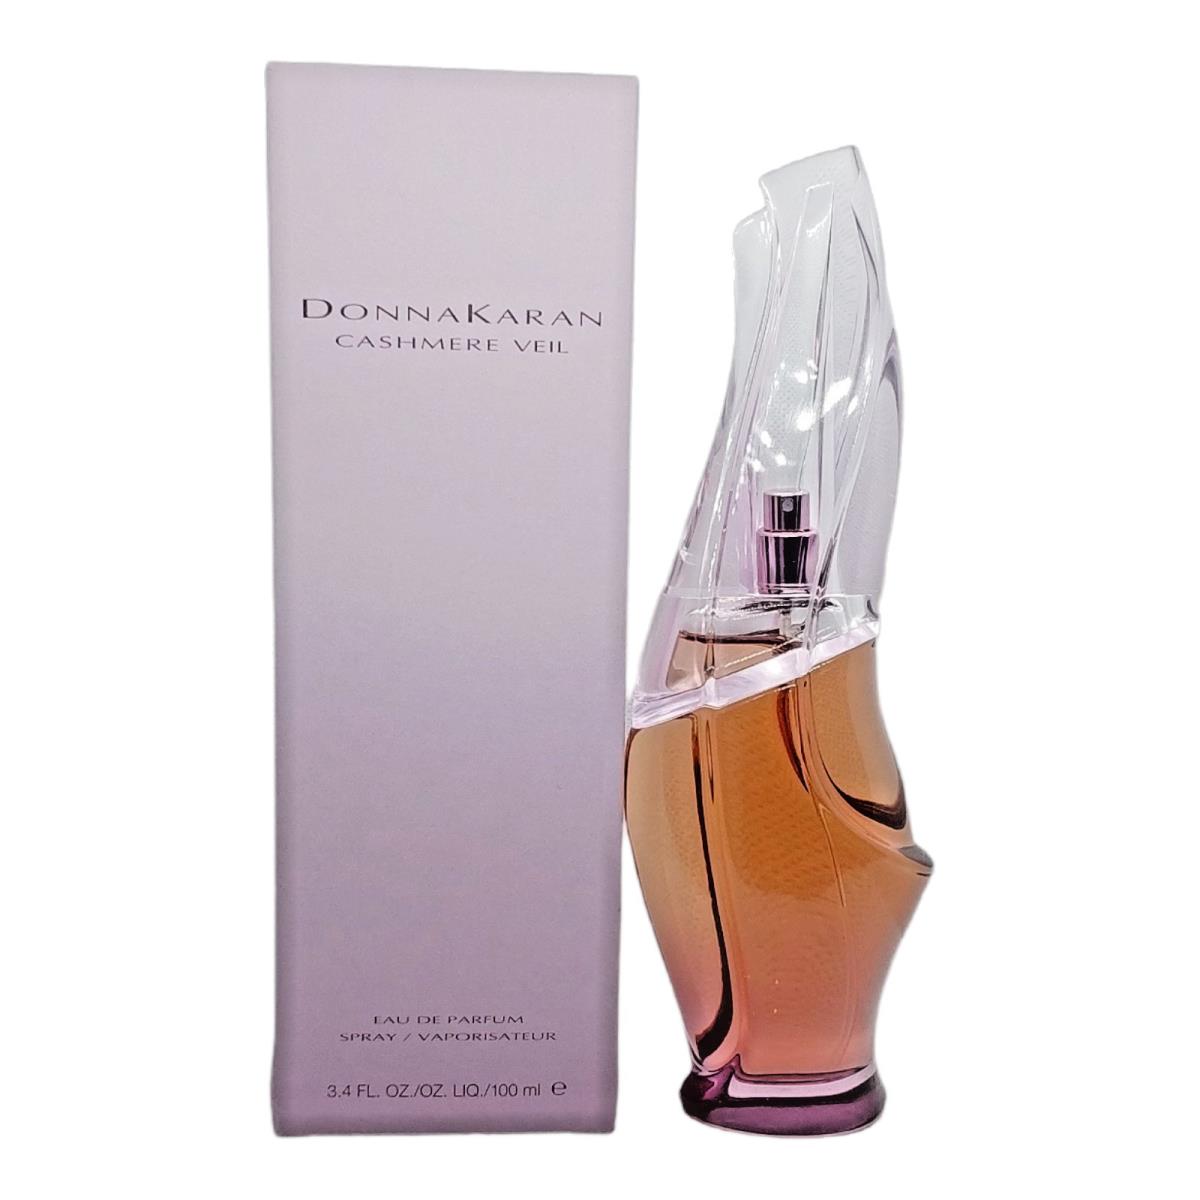 Dkny Donna Karan Cashmere Veil Eau De Parfum 3.4 oz 100 ml Women Spray Perfume